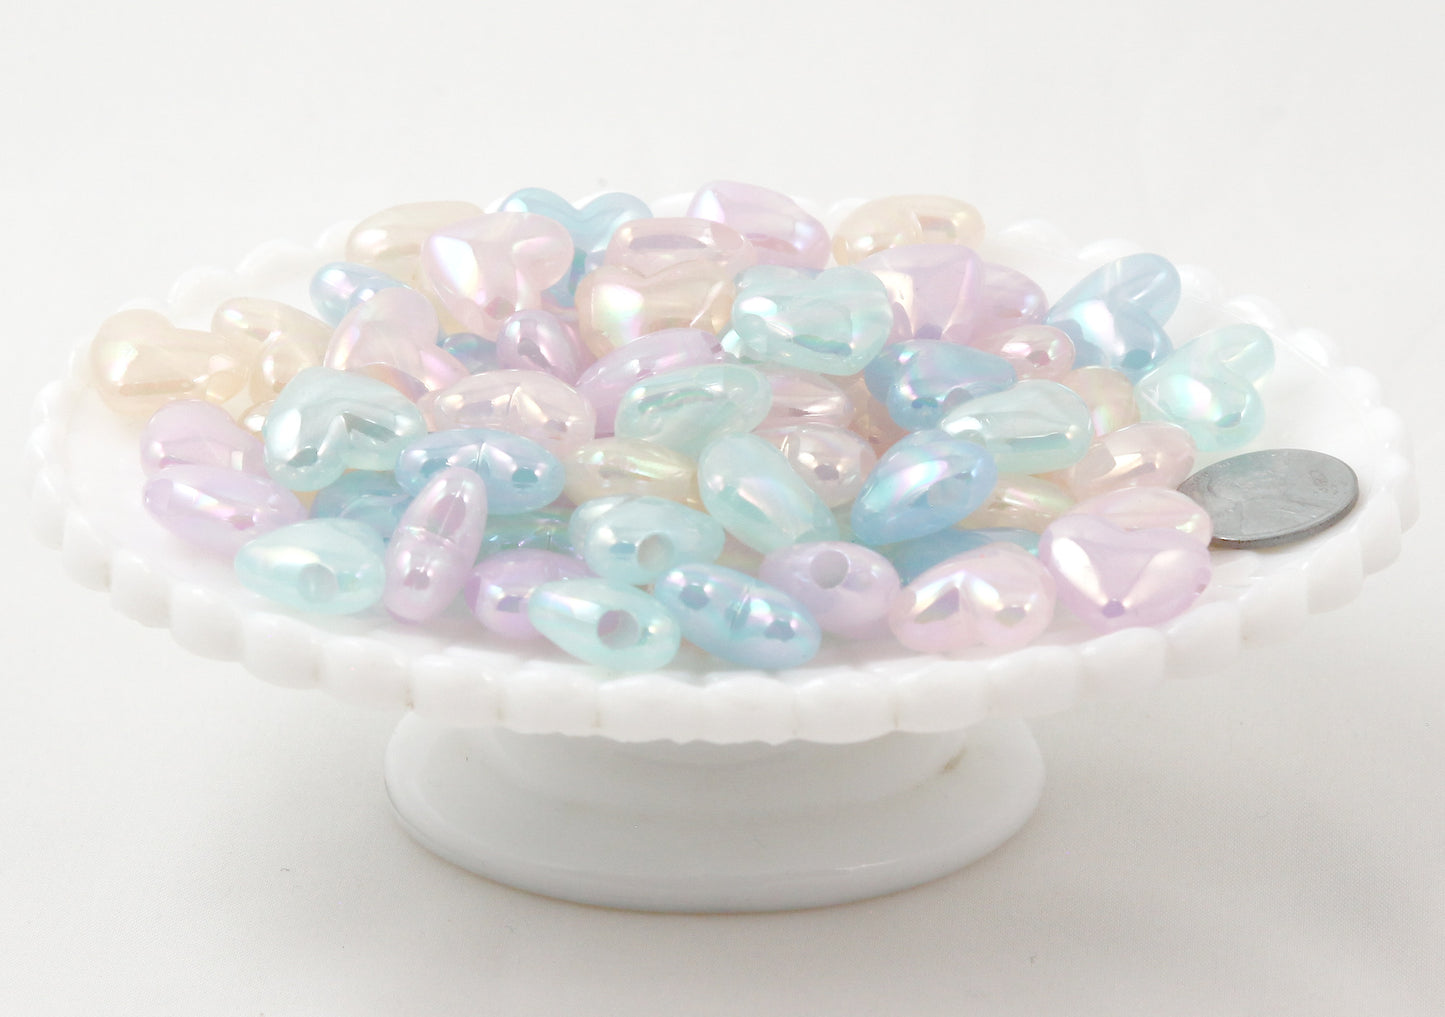 Pastel Heart Beads - 18mm Dreamy AB Iridescent Pastel Heart Bead Acrylic or Resin Beads - 30 pcs set